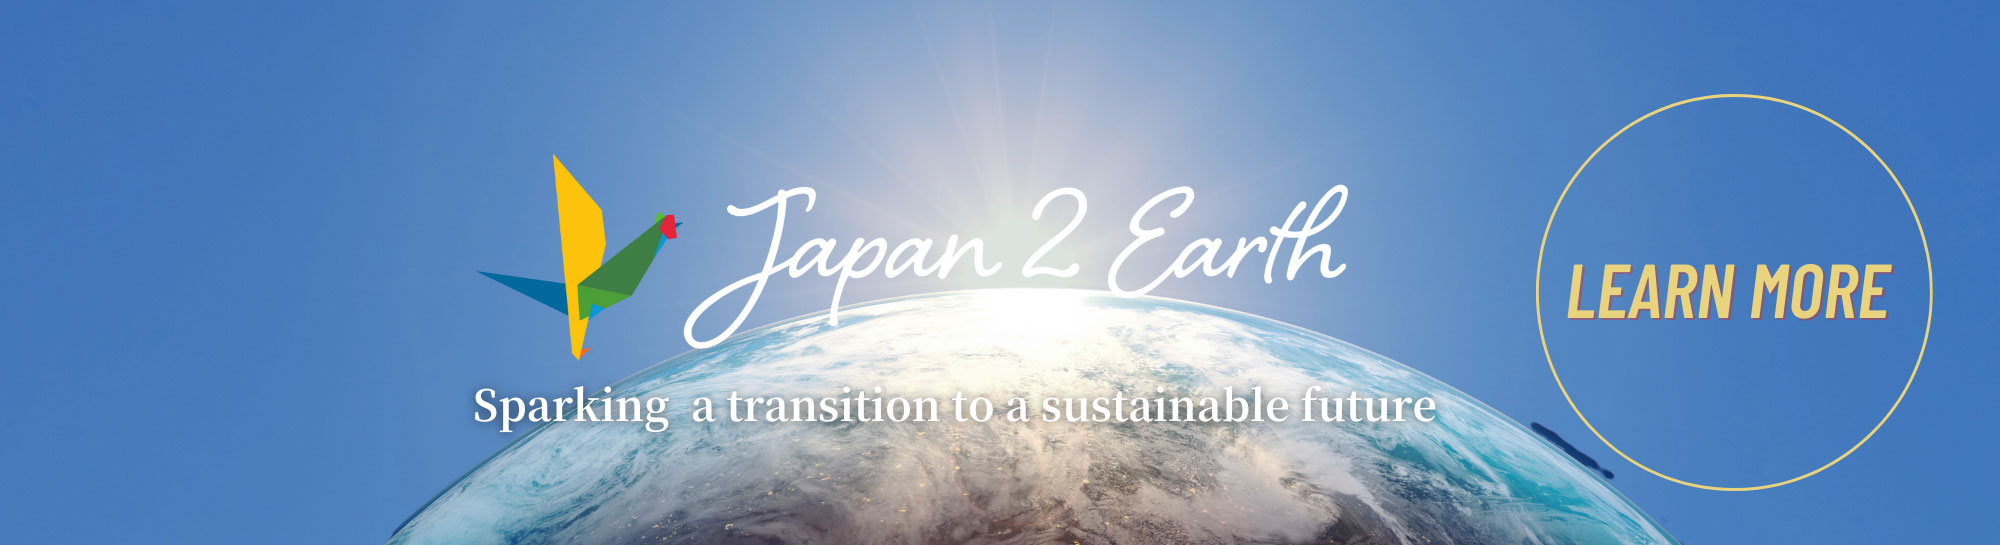 Japan 2 Earth Masthead Banner